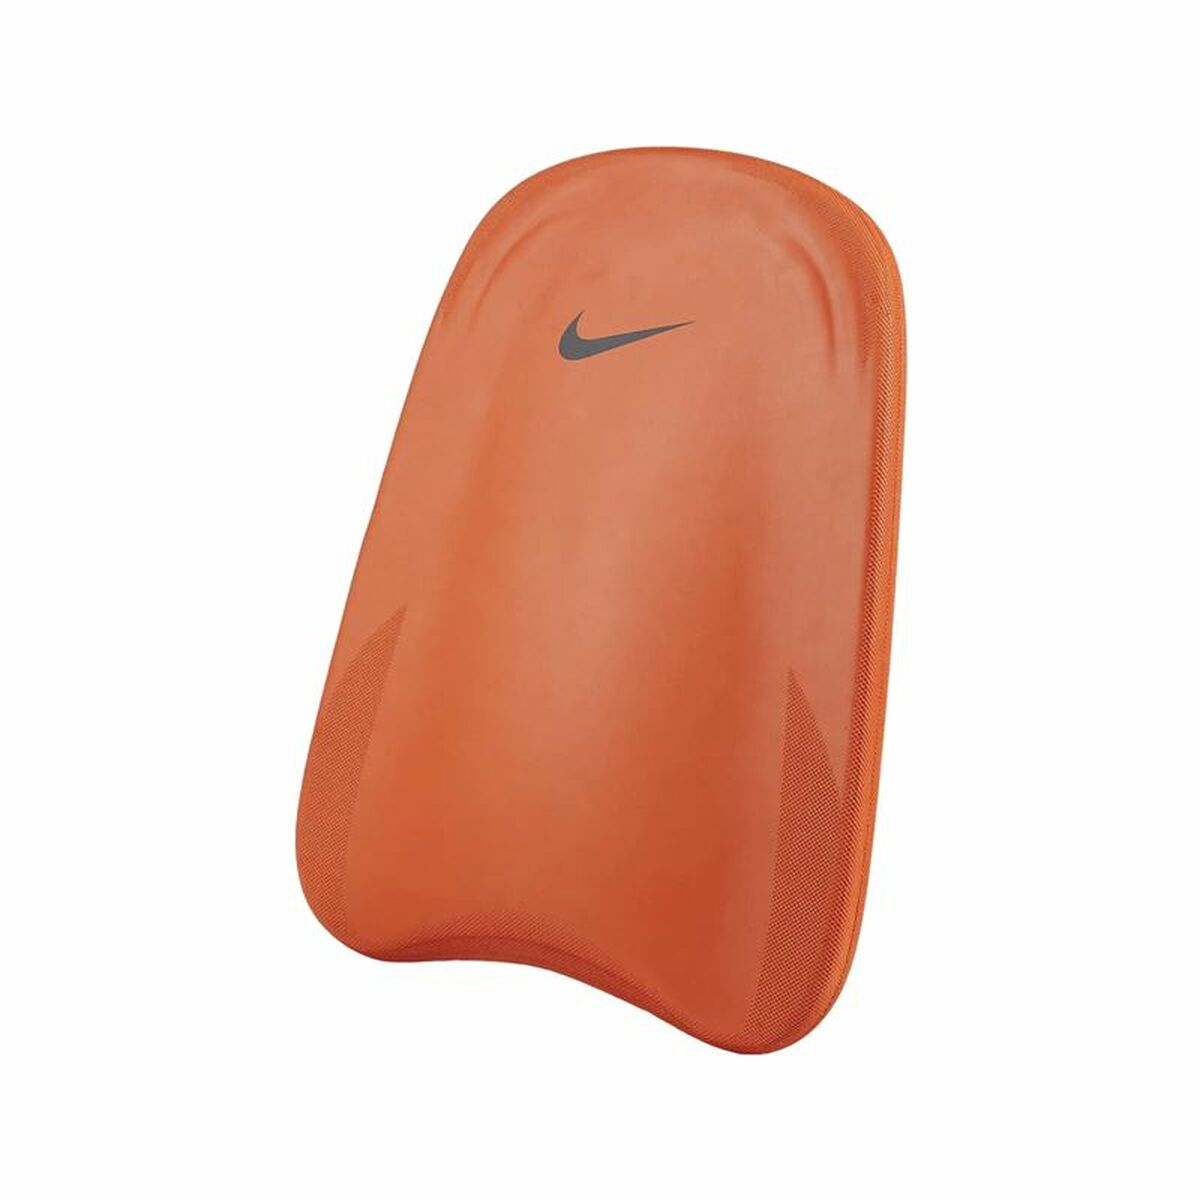 Swimming float Nike NESS9172-618 Orange